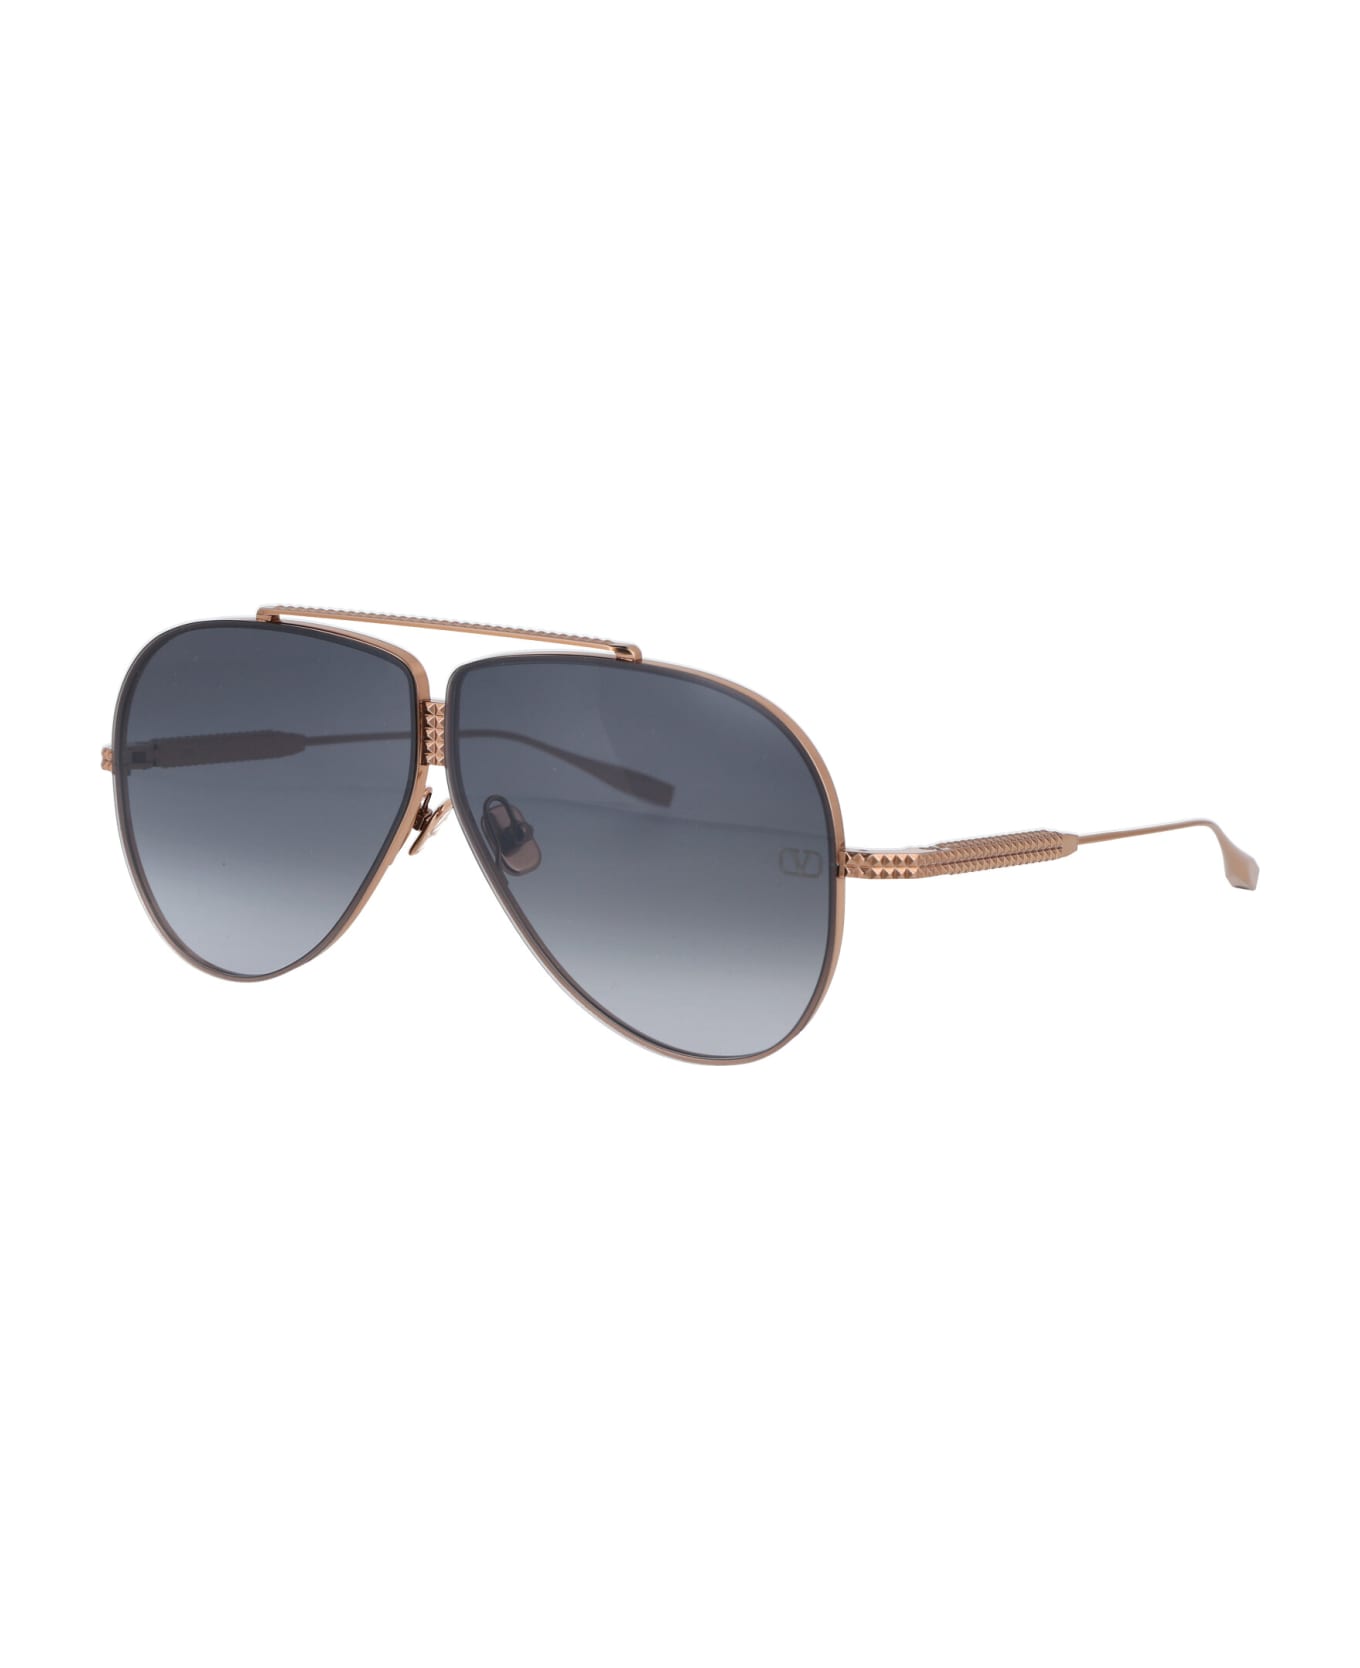 Valentino Eyewear Xvi Sunglasses - ROSE GOLD W/ DARK GREY BLACK FLASH MIRROR